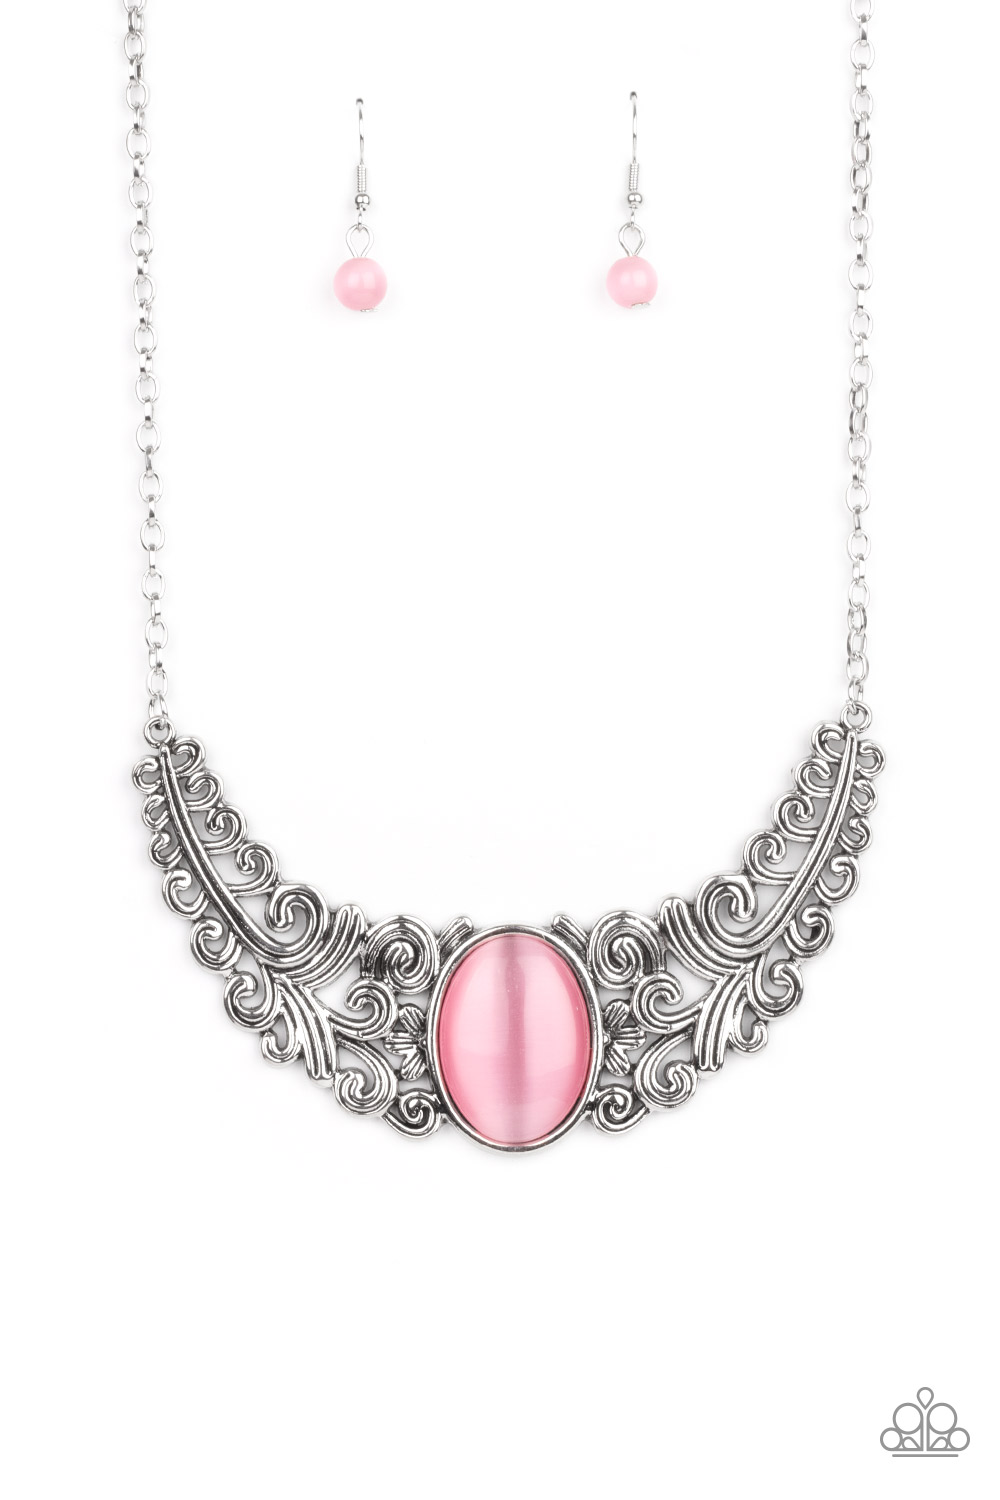 Necklace - Celestial Eden - Pink